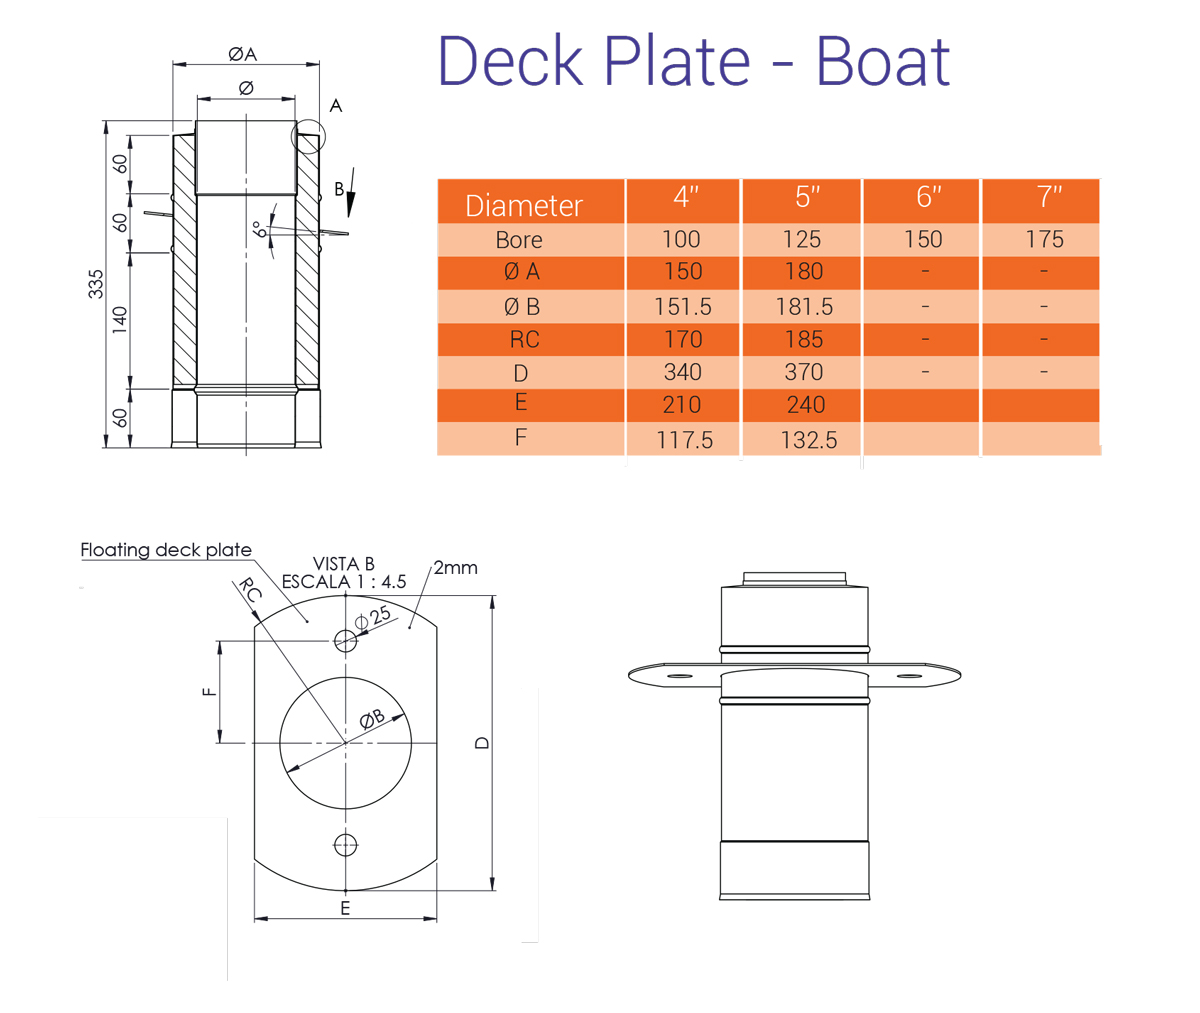 Deck plate dimensions